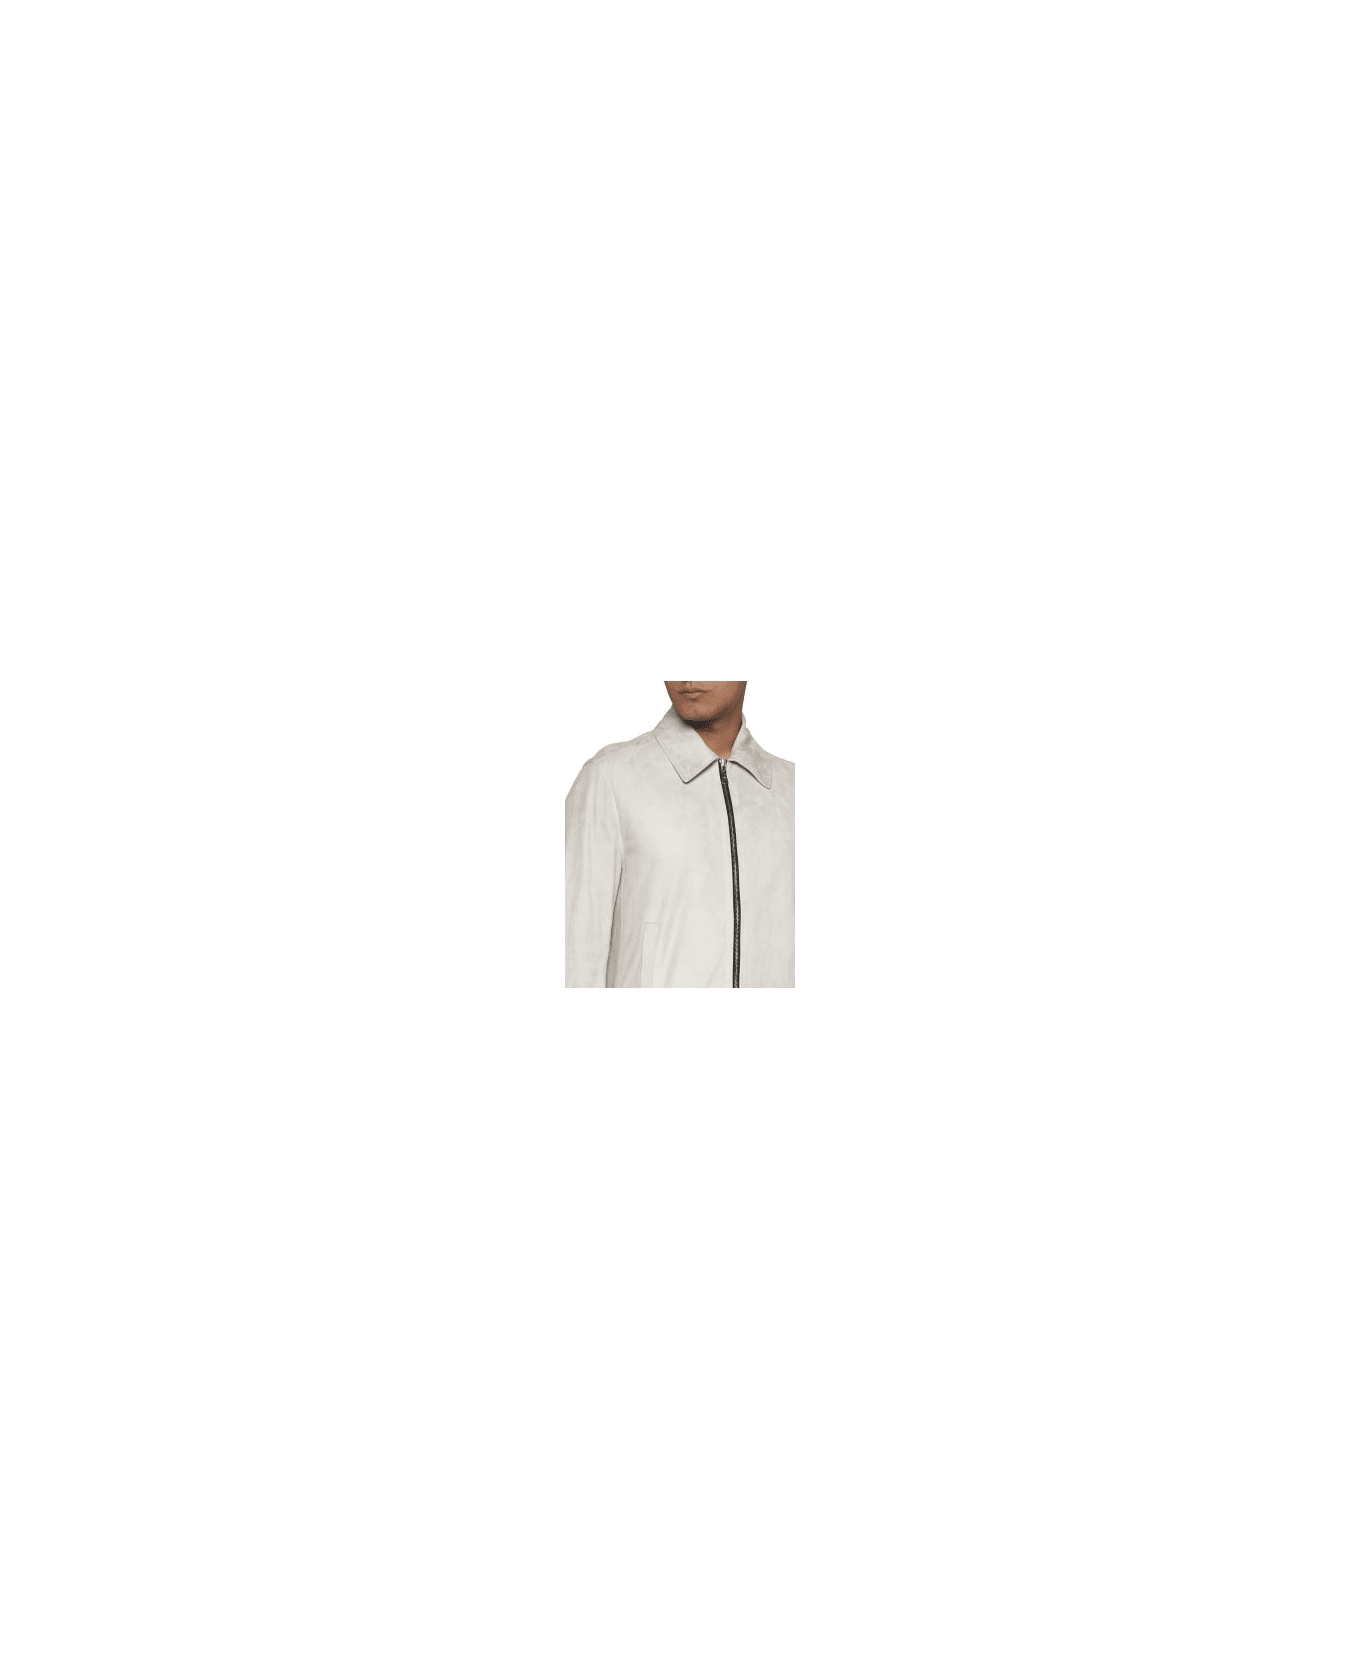 Tagliatore Jacket - White